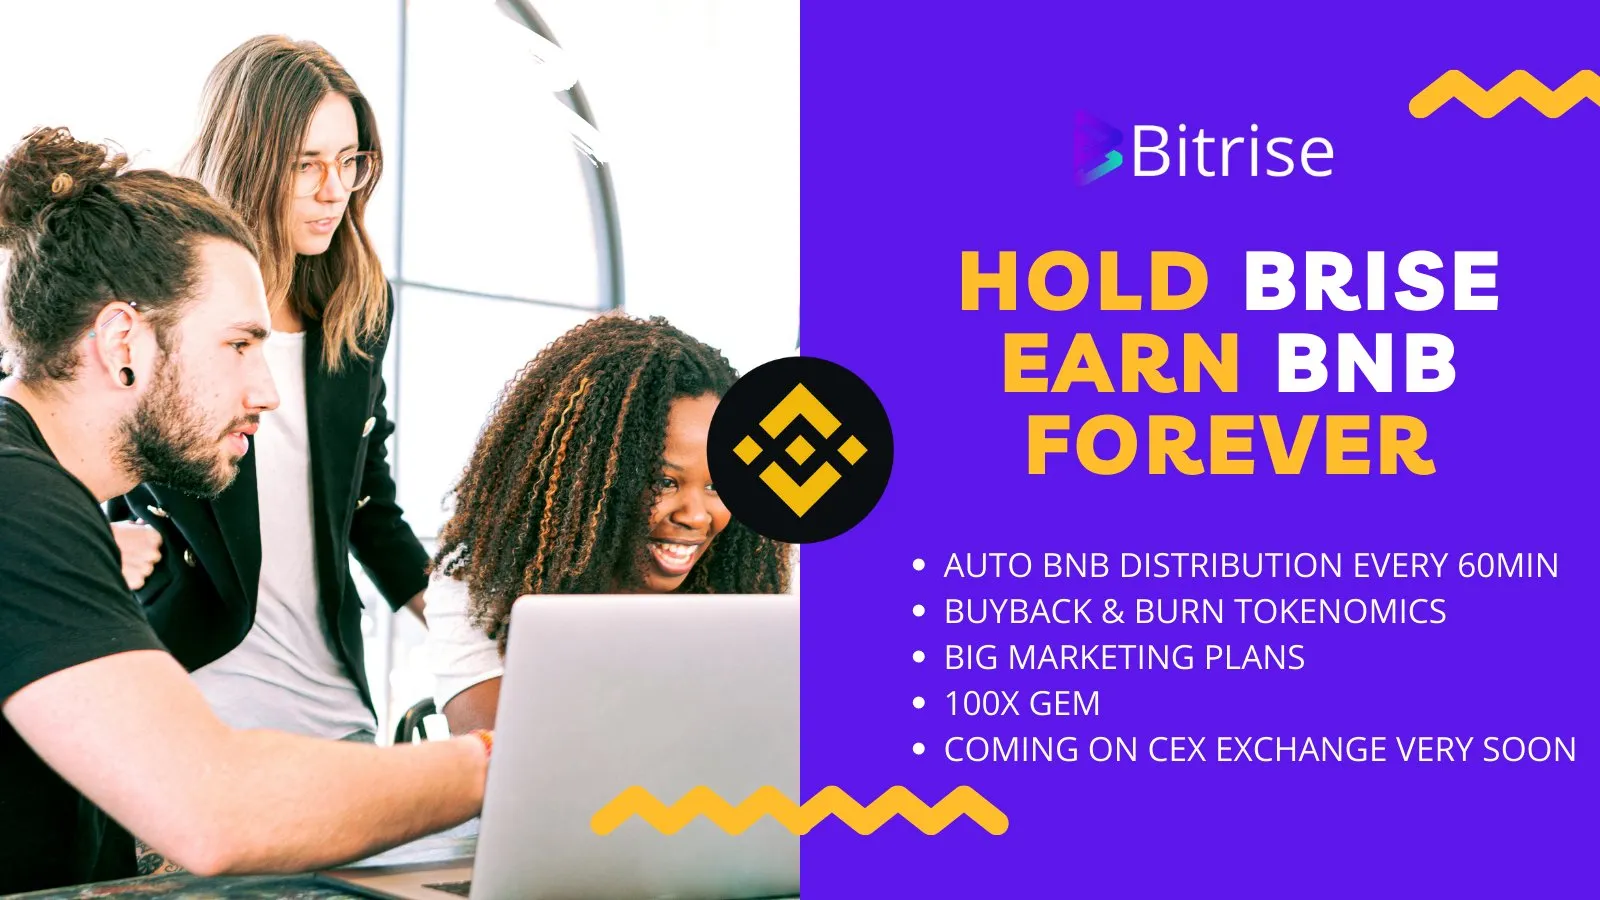 Bitrise - Hyper Deflationary Token with BNB Rewards | Hold $BRISE & Earn BNB